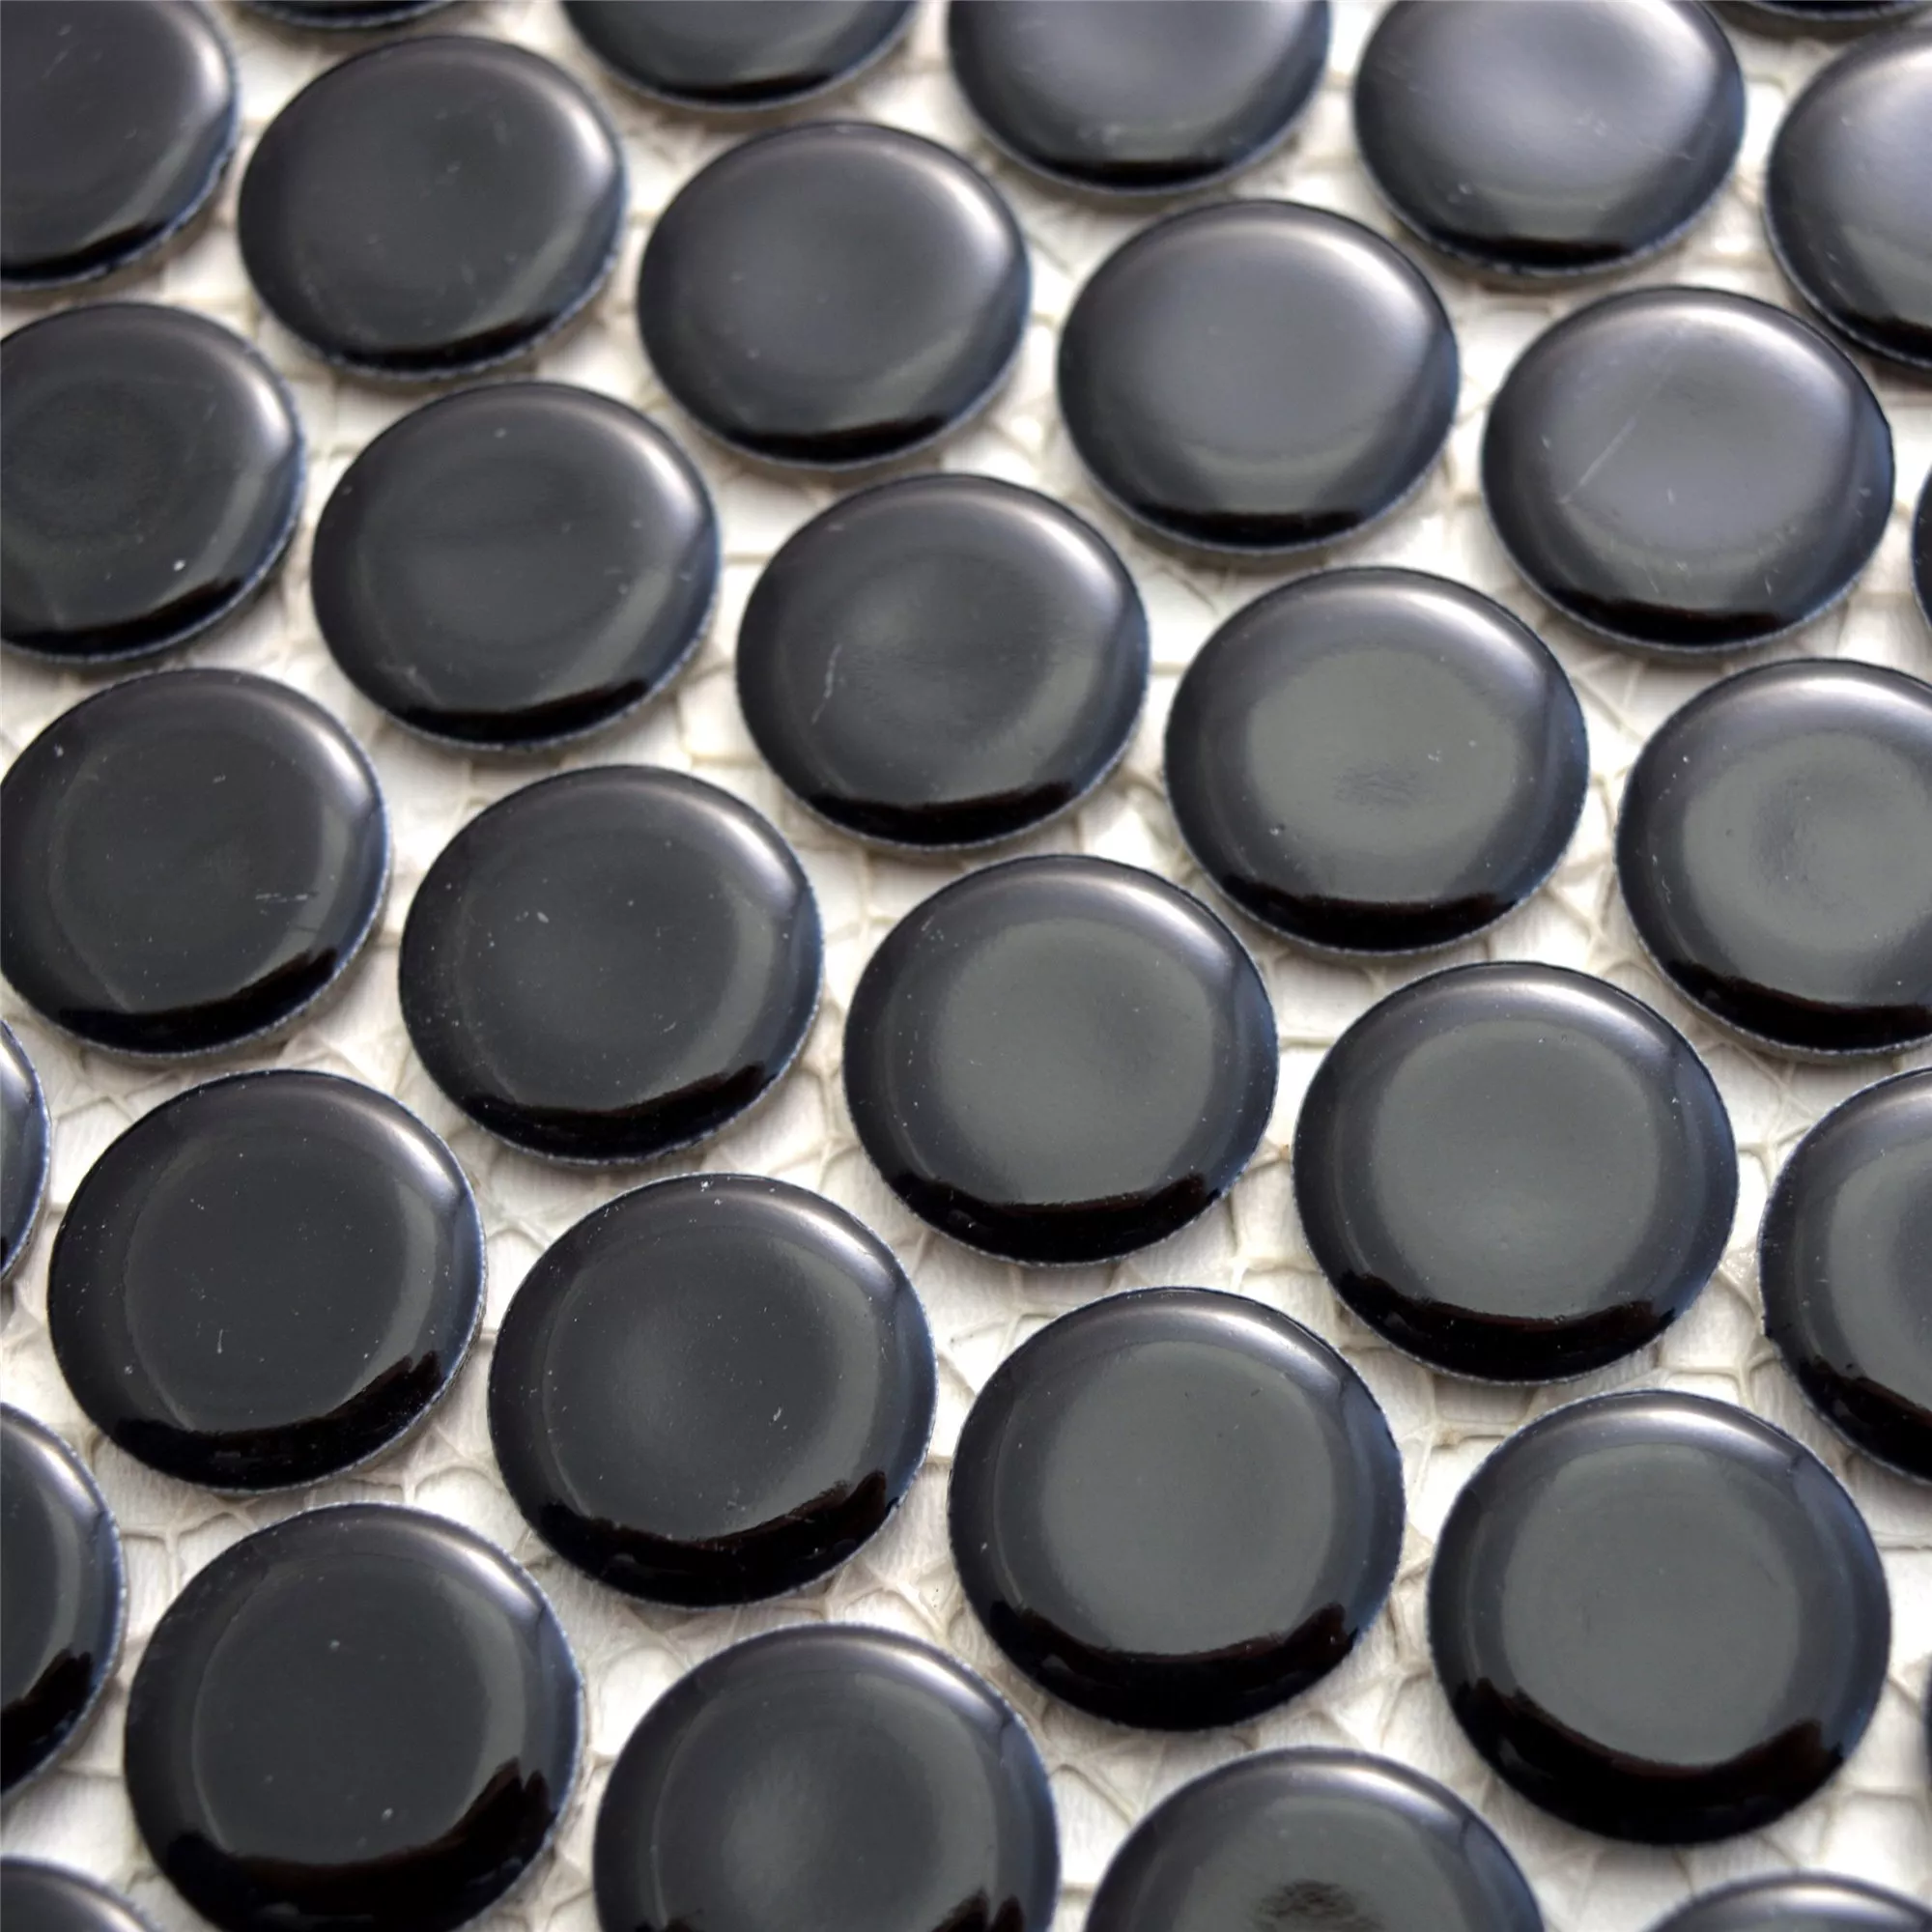 Sample Ceramic Mosaic Tiles Button Yantra Black Glossy